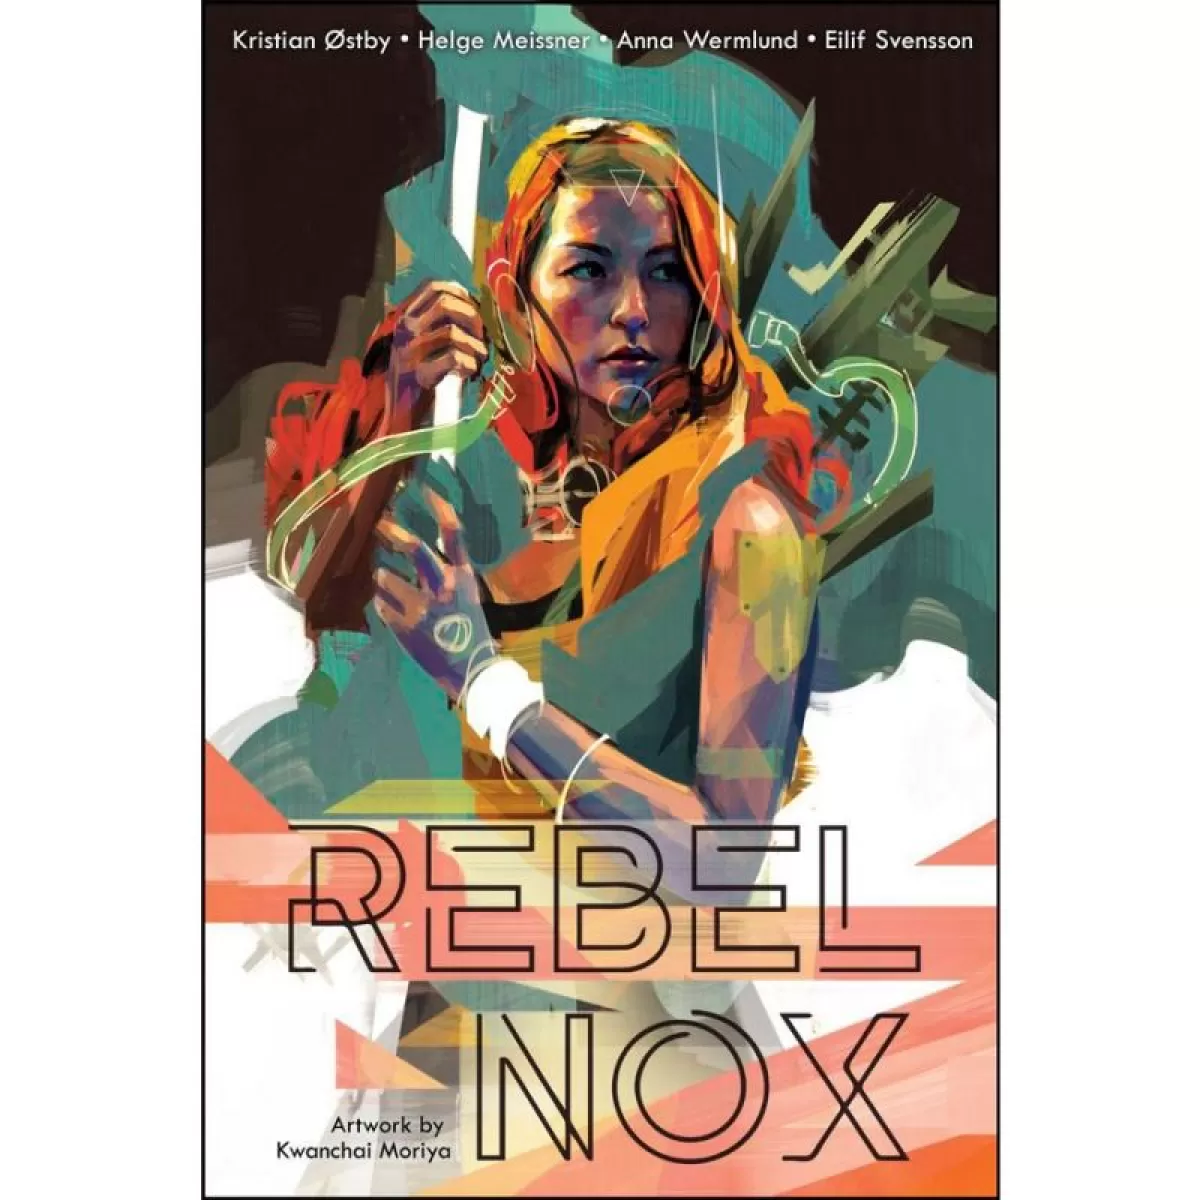 Rebel nox